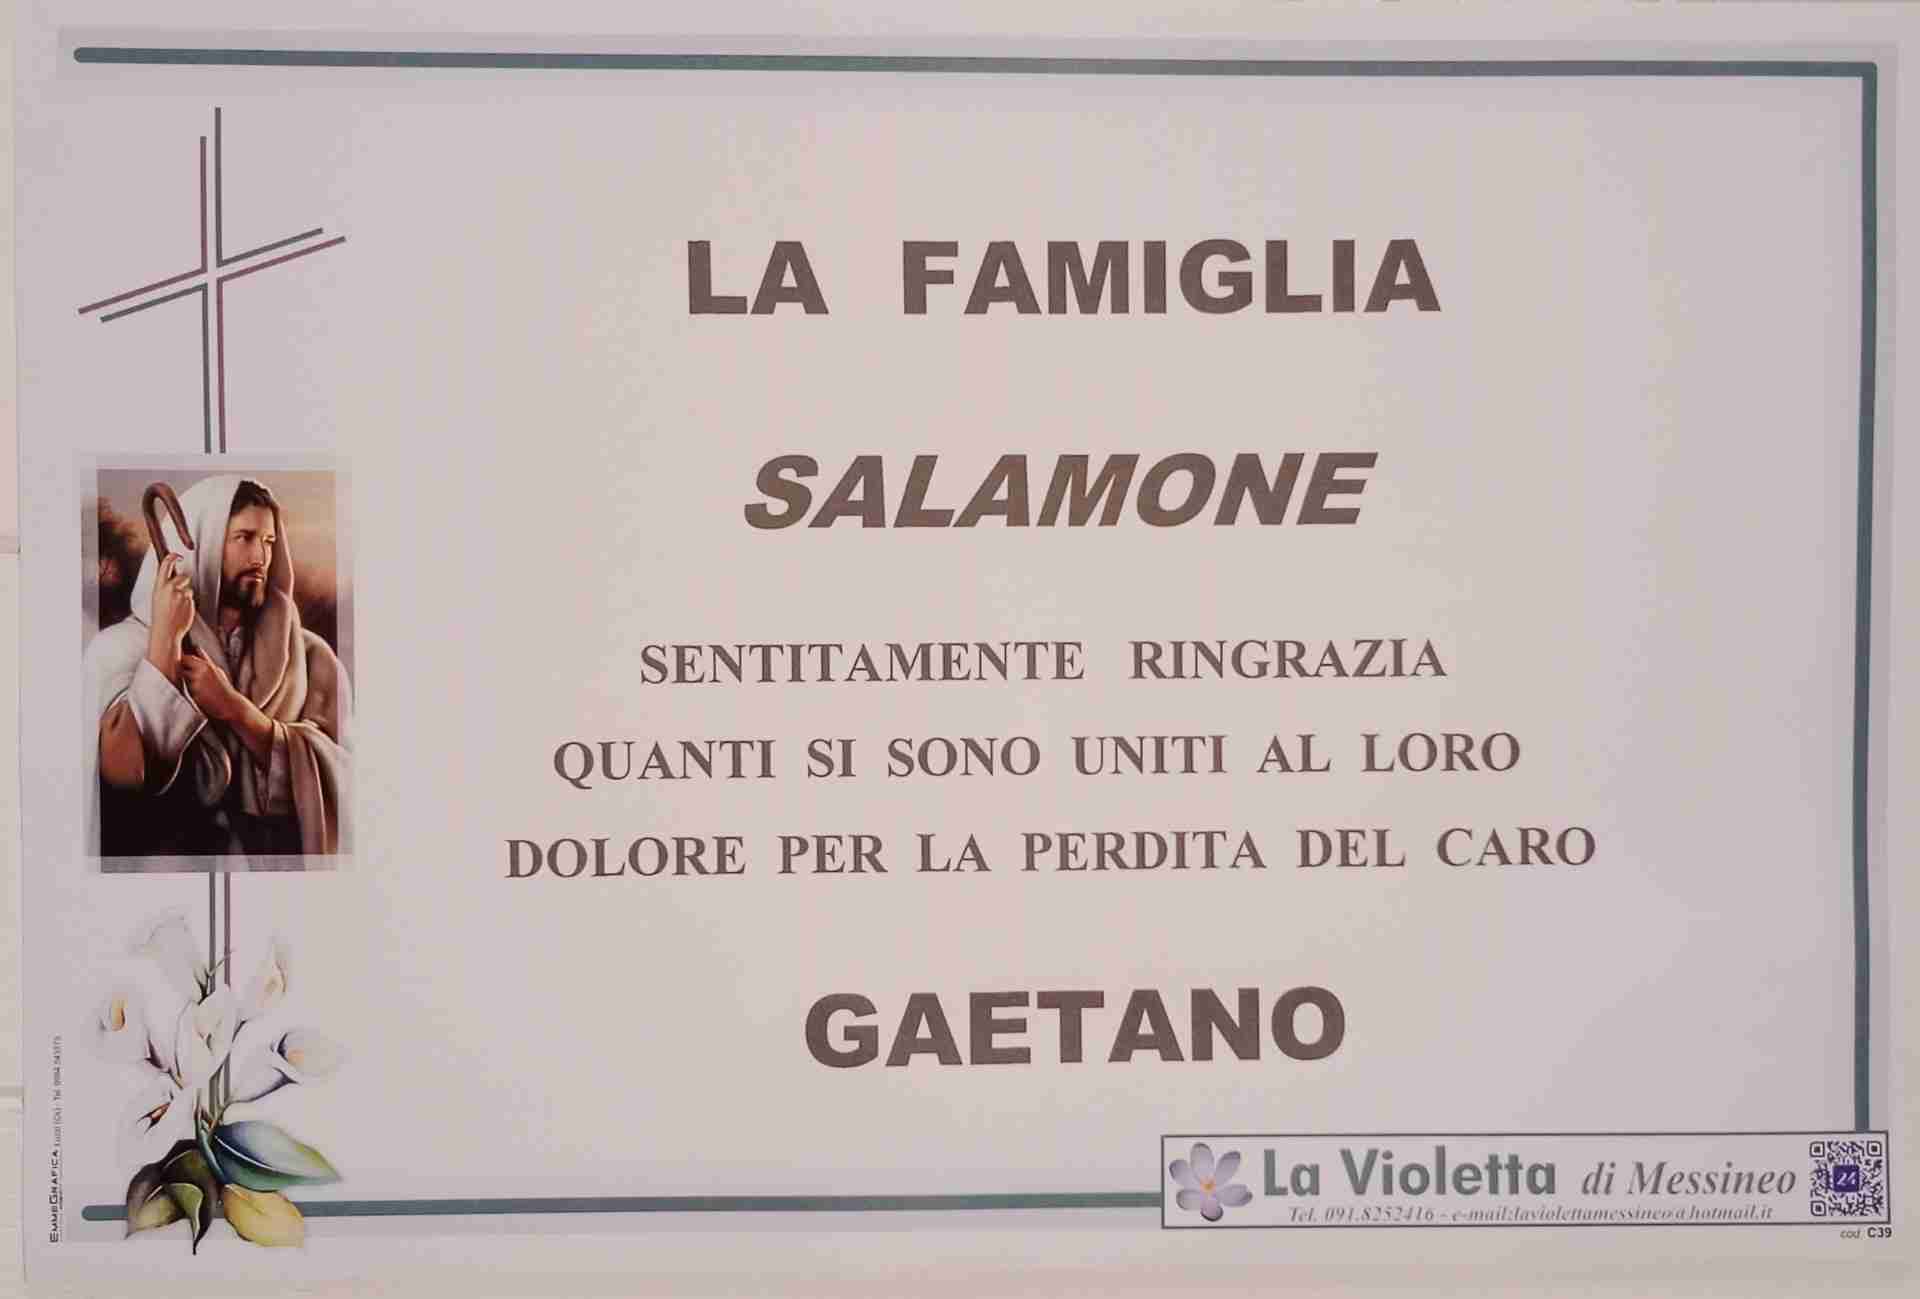 Gaetano Salamone